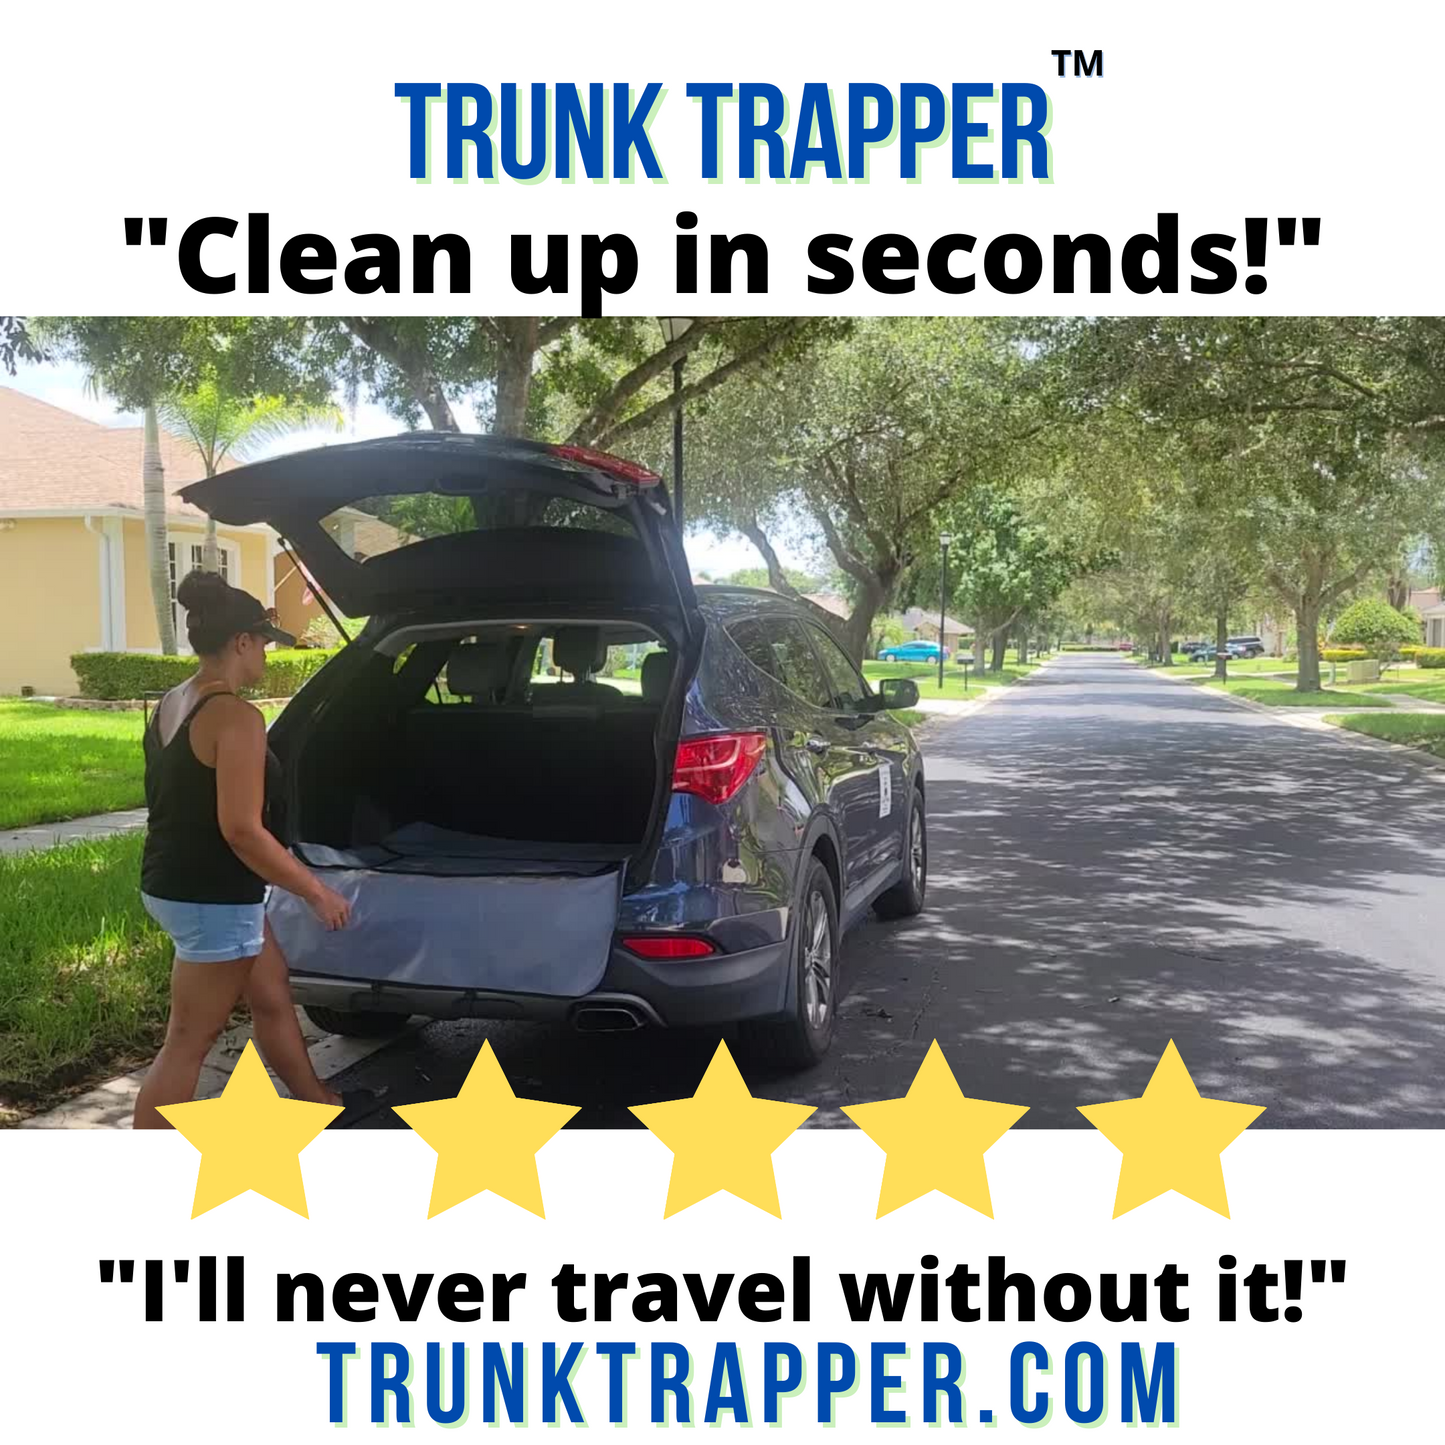 Trunk Trapper Keep it Clean